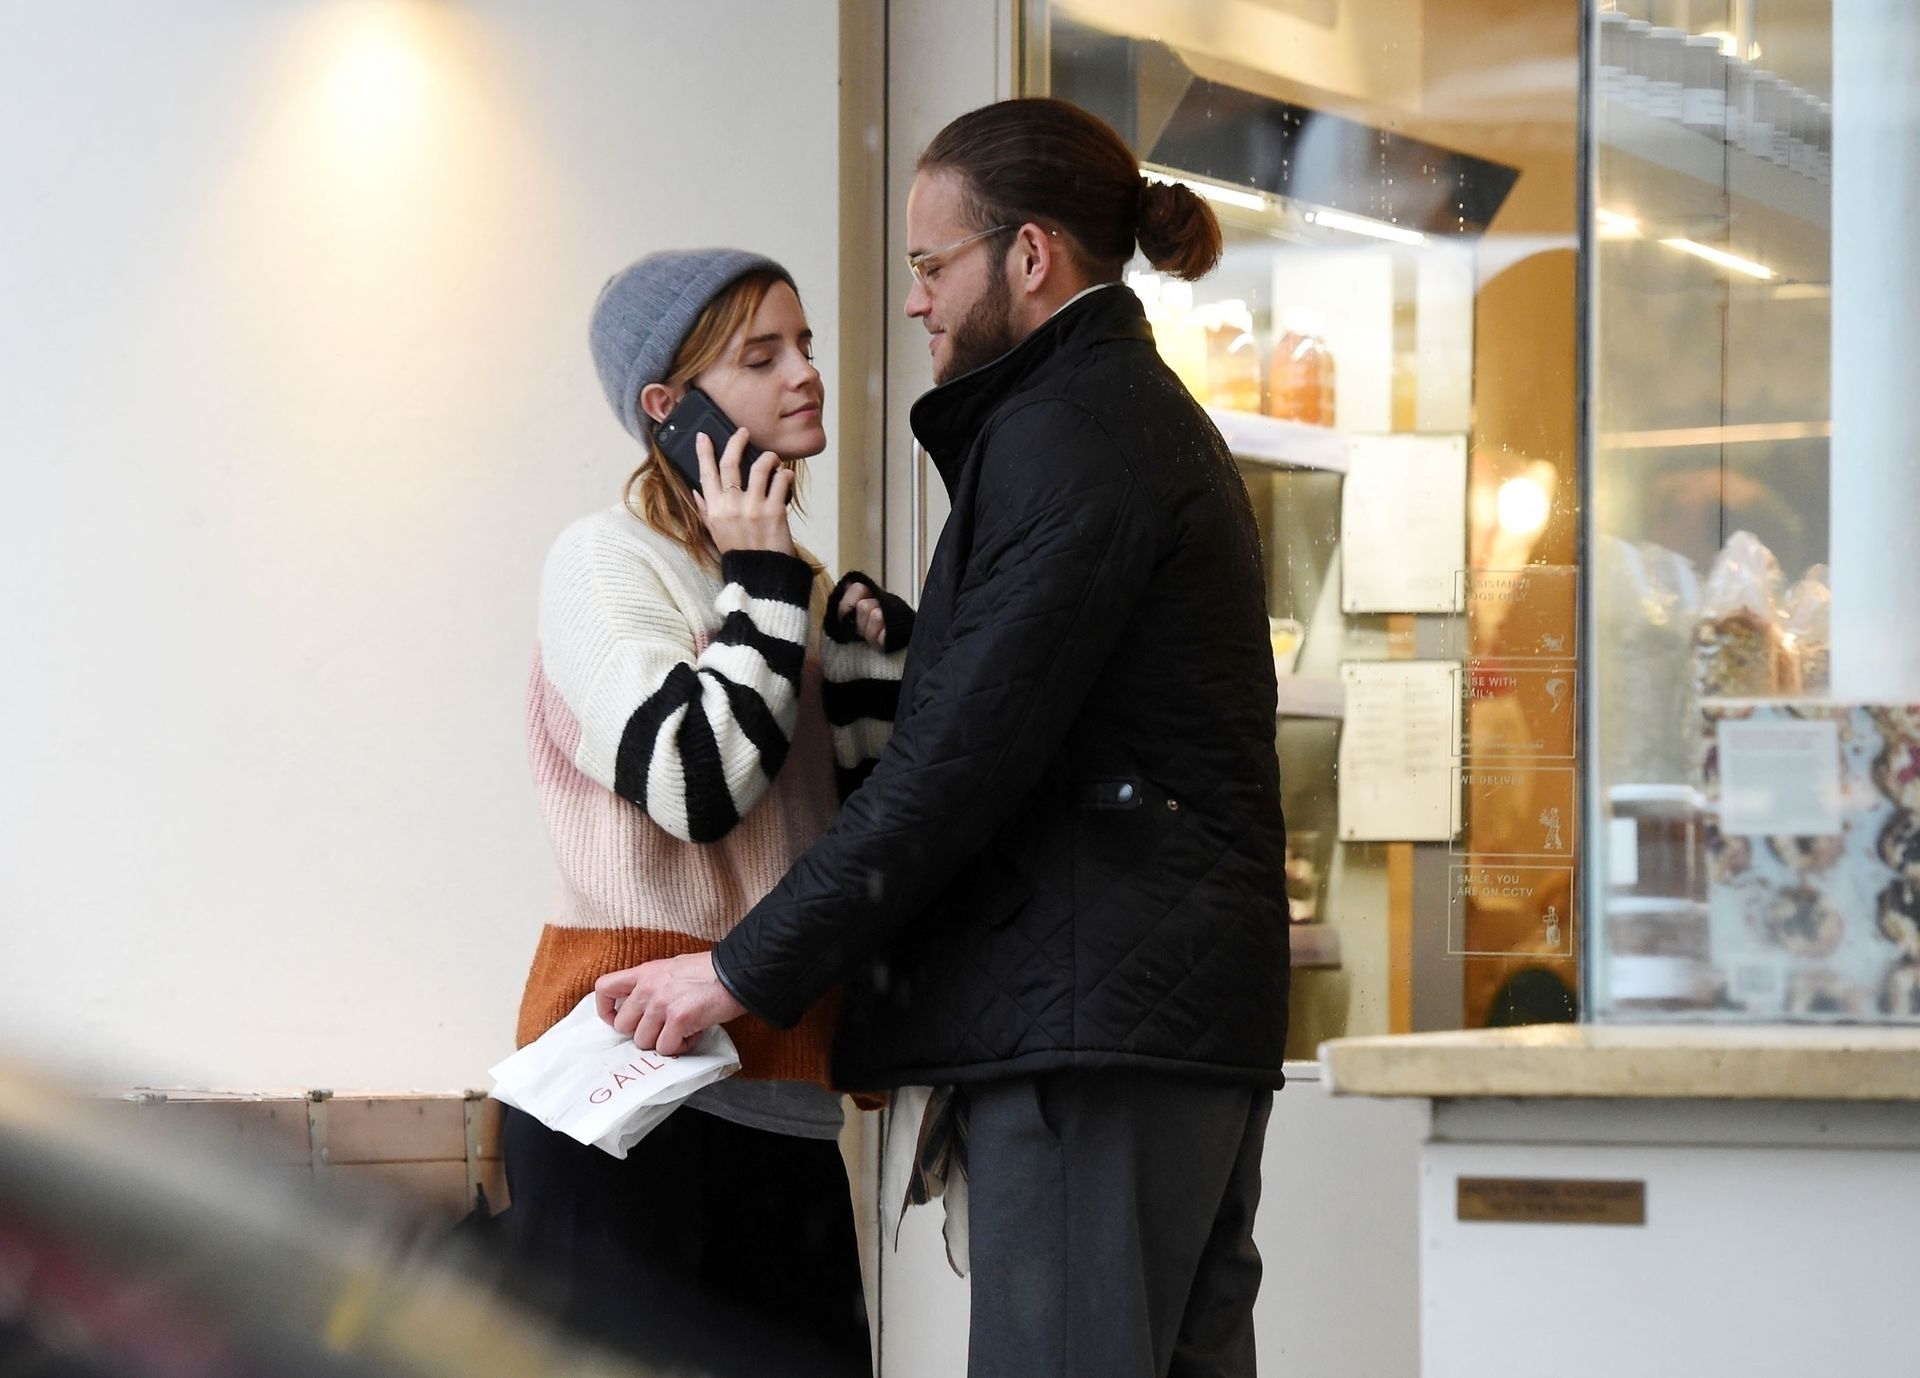 Emma Watson Was Seen Passionately Kissing Her Boyfr
iend Leo Robinton in London (23 Photos)